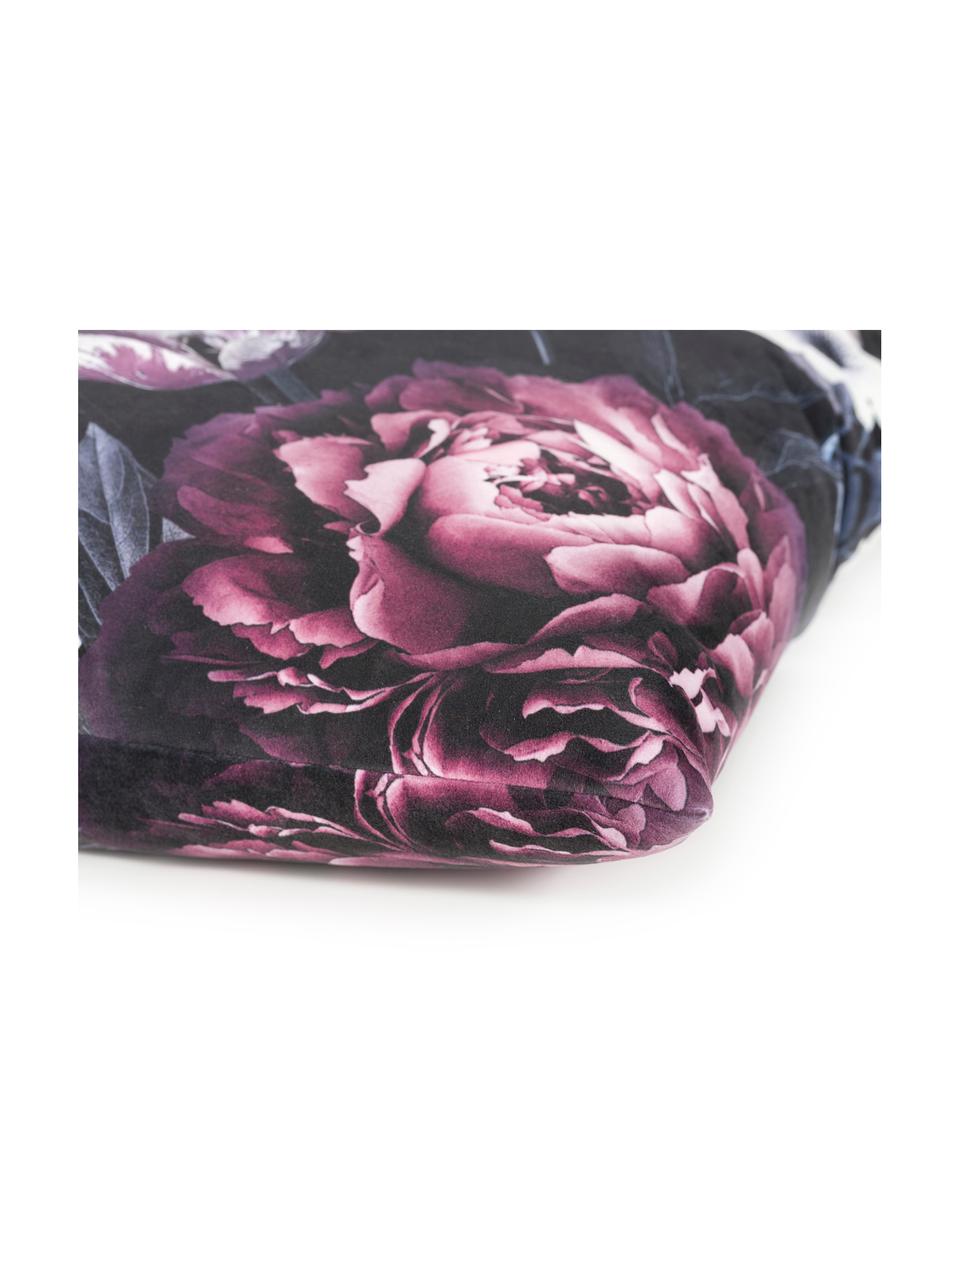 Samt-Kissenhülle Beverly mit dunklem Blumenmuster, Polyestersamt, bedruckt, Schwarz, Mauve, Lila, Rosa, 50 x 50 cm